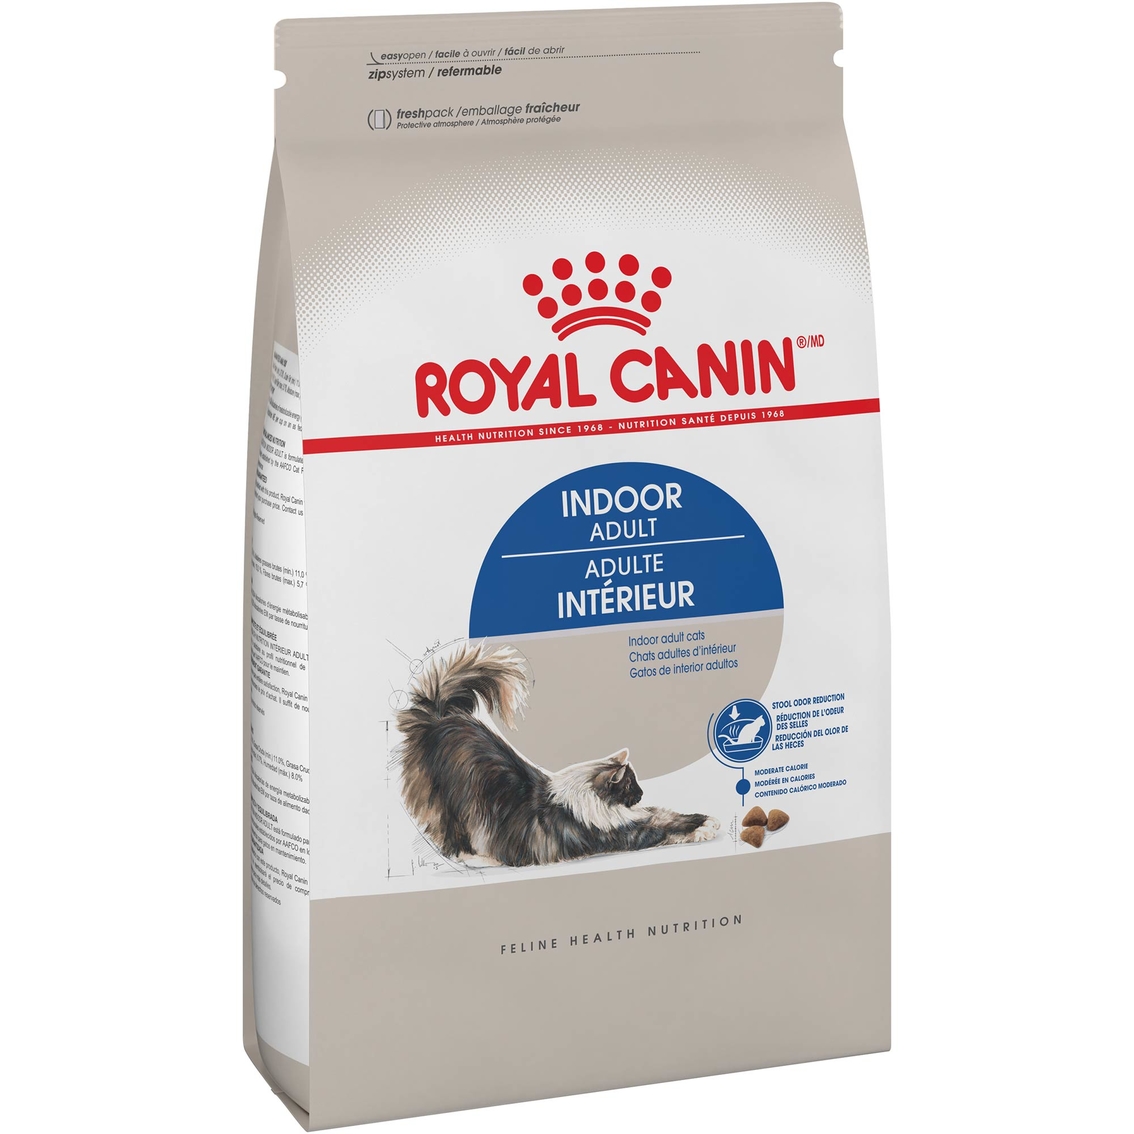 royal canin calorie control